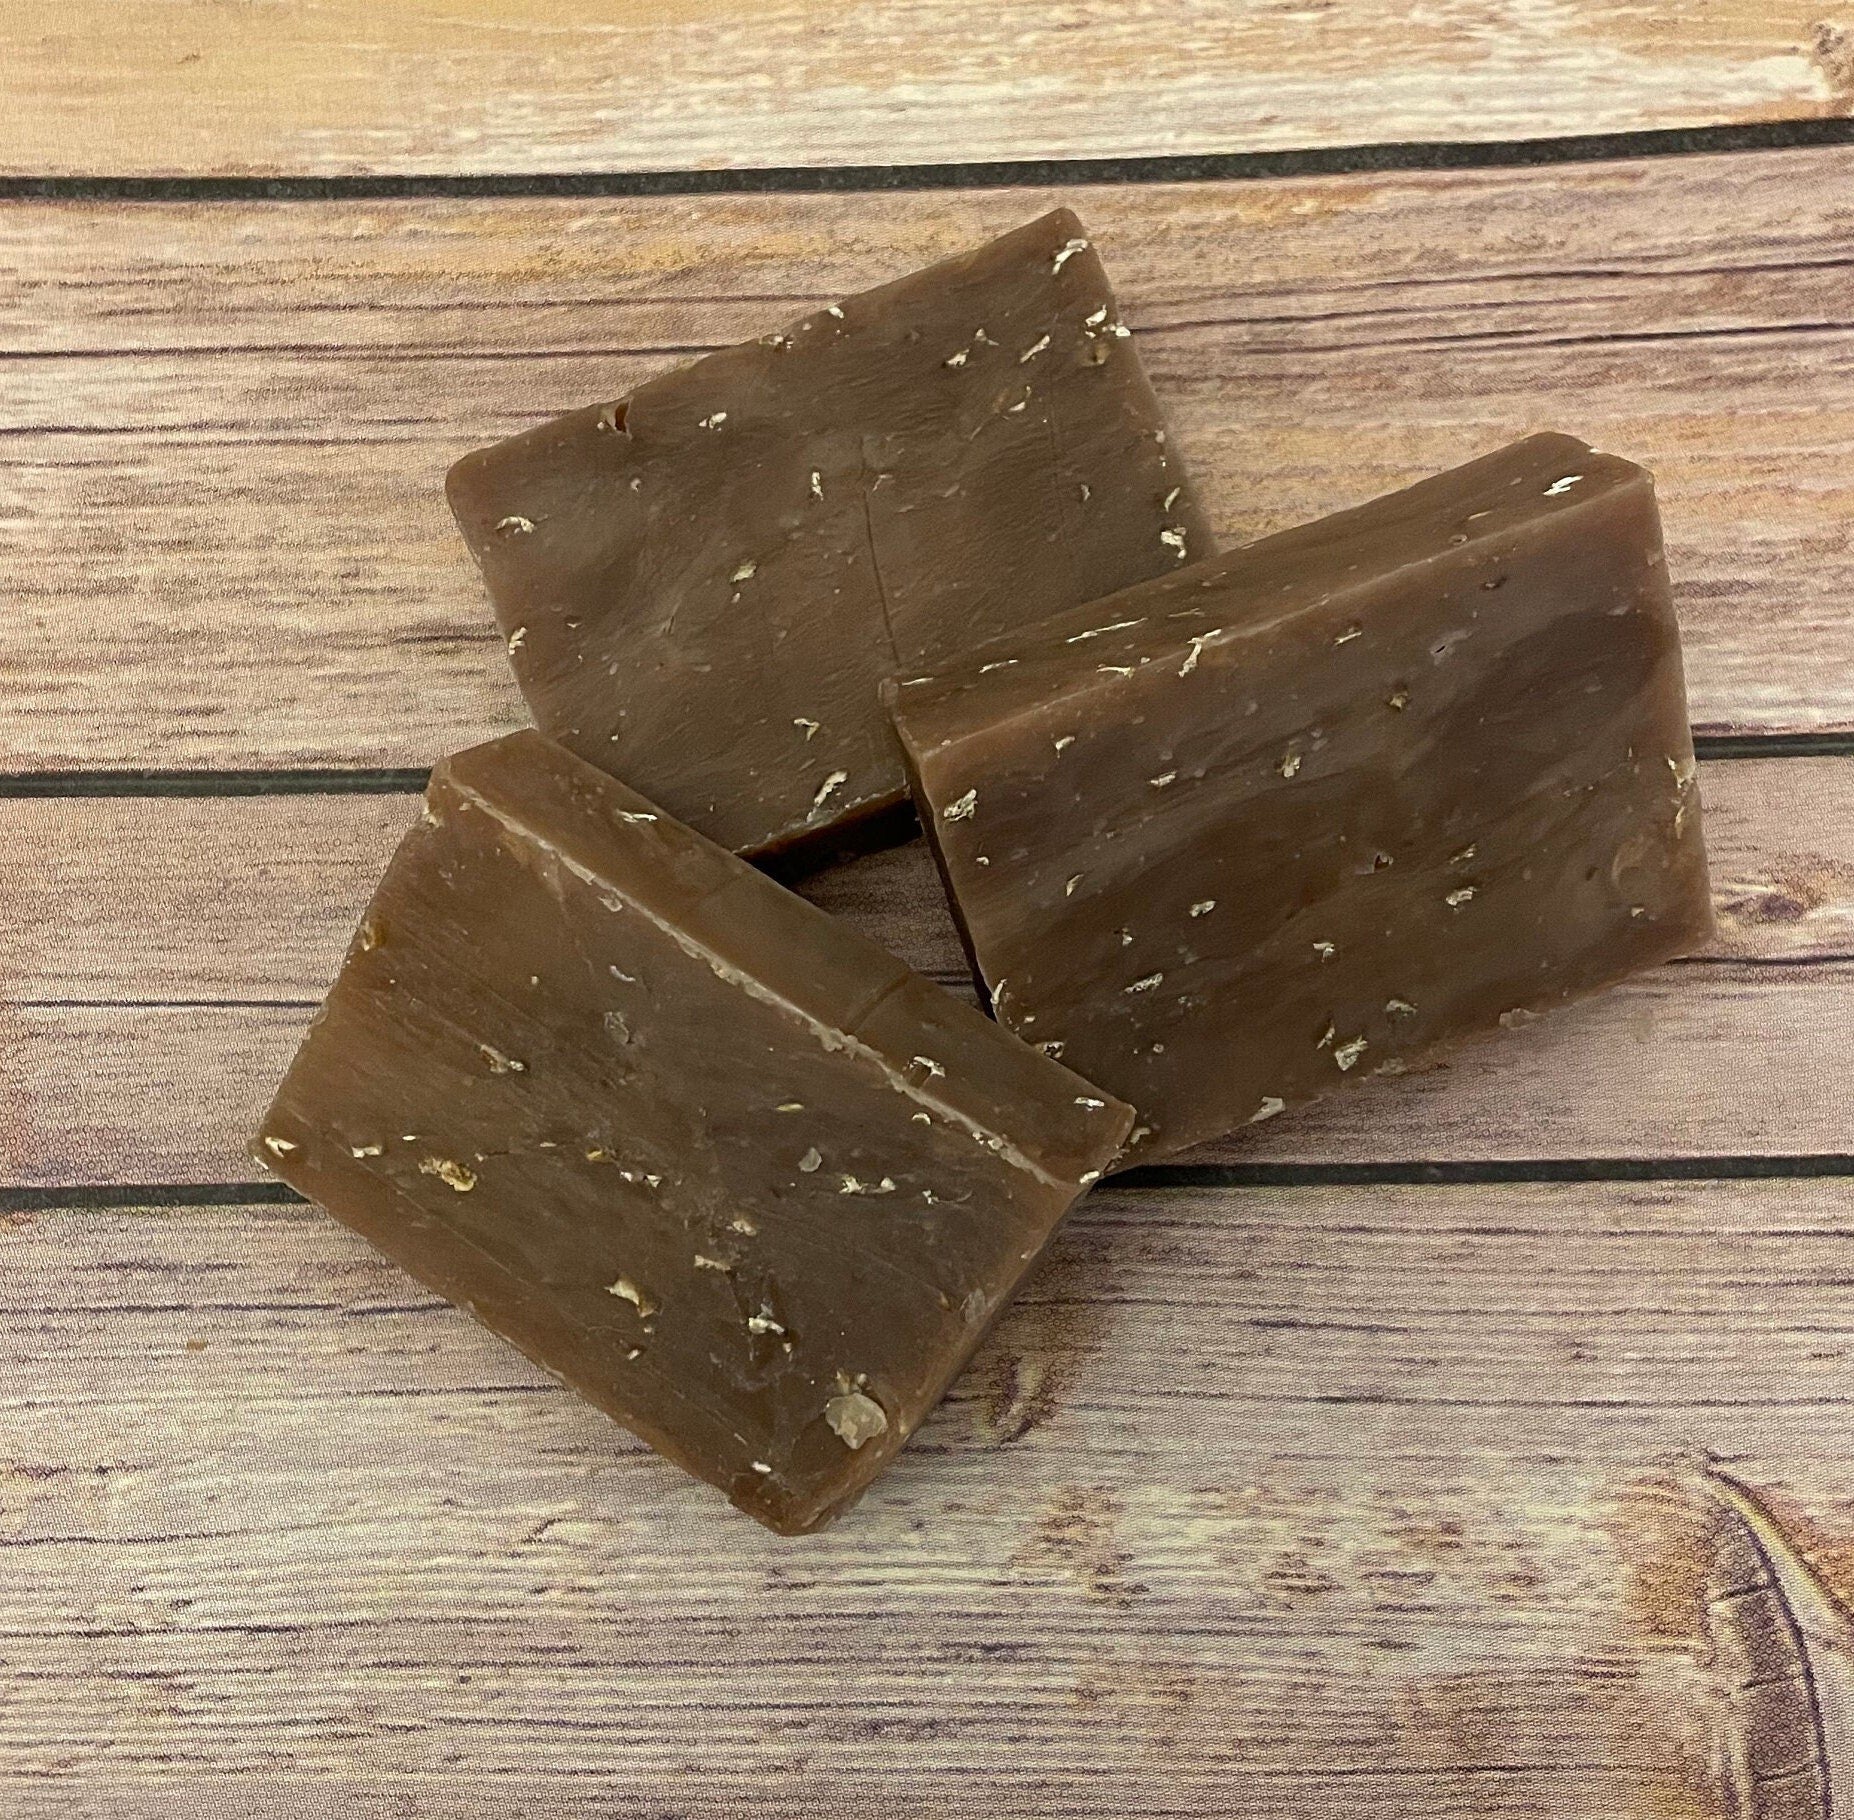 Ivy Creek Honey and Oats Goat Milk Soap | Natural, Fair Trade Handmade Soap | 4 oz bar soap